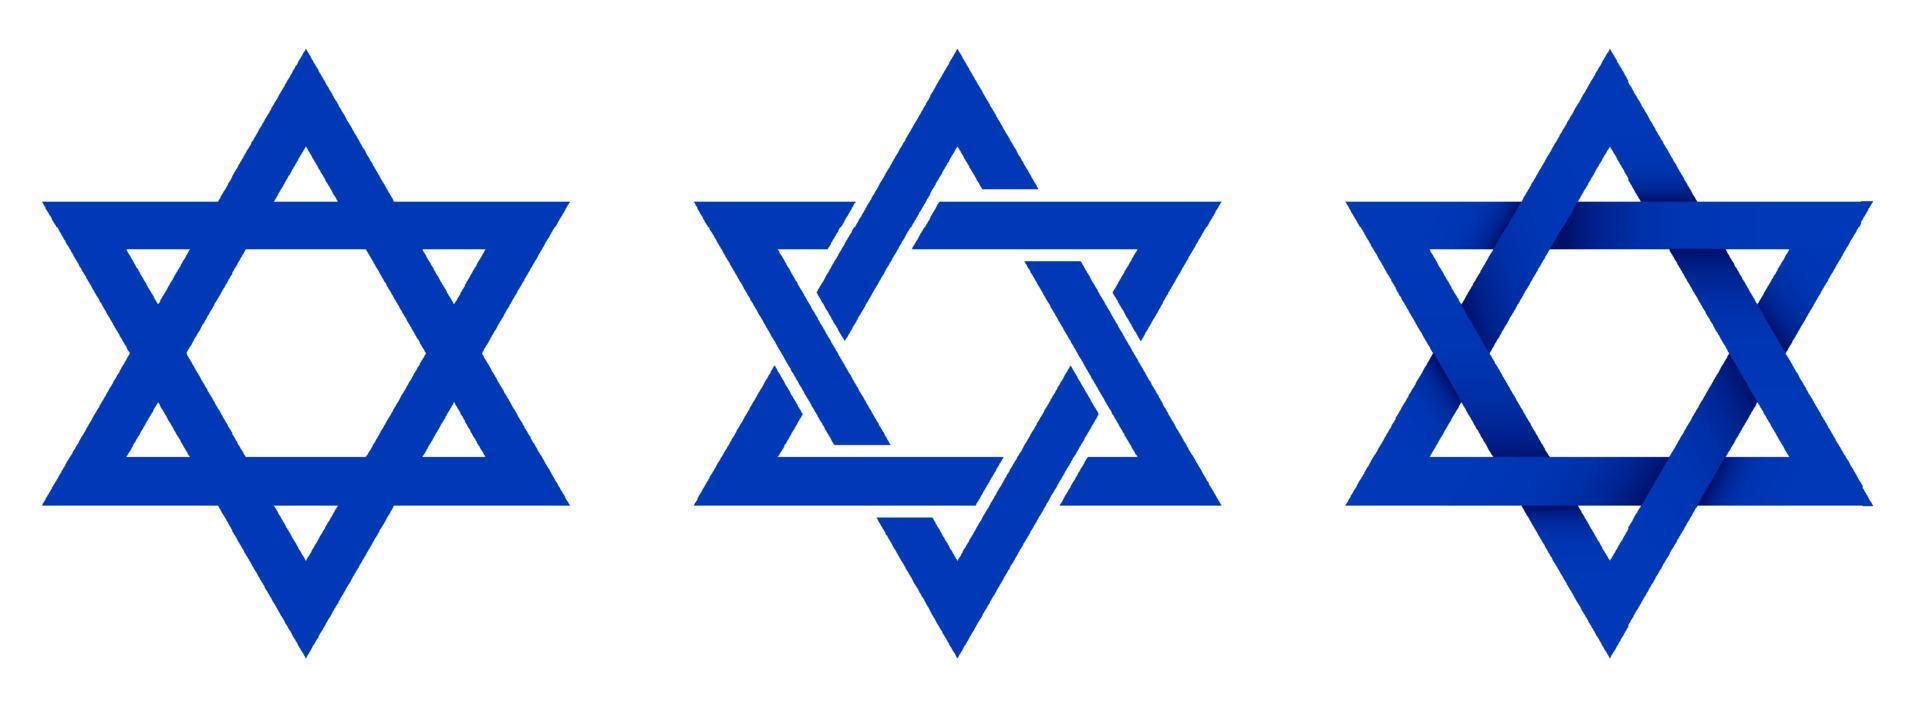 símbolo de la estrella de david. estrella hexagonal de la bandera nacional de israel. vector